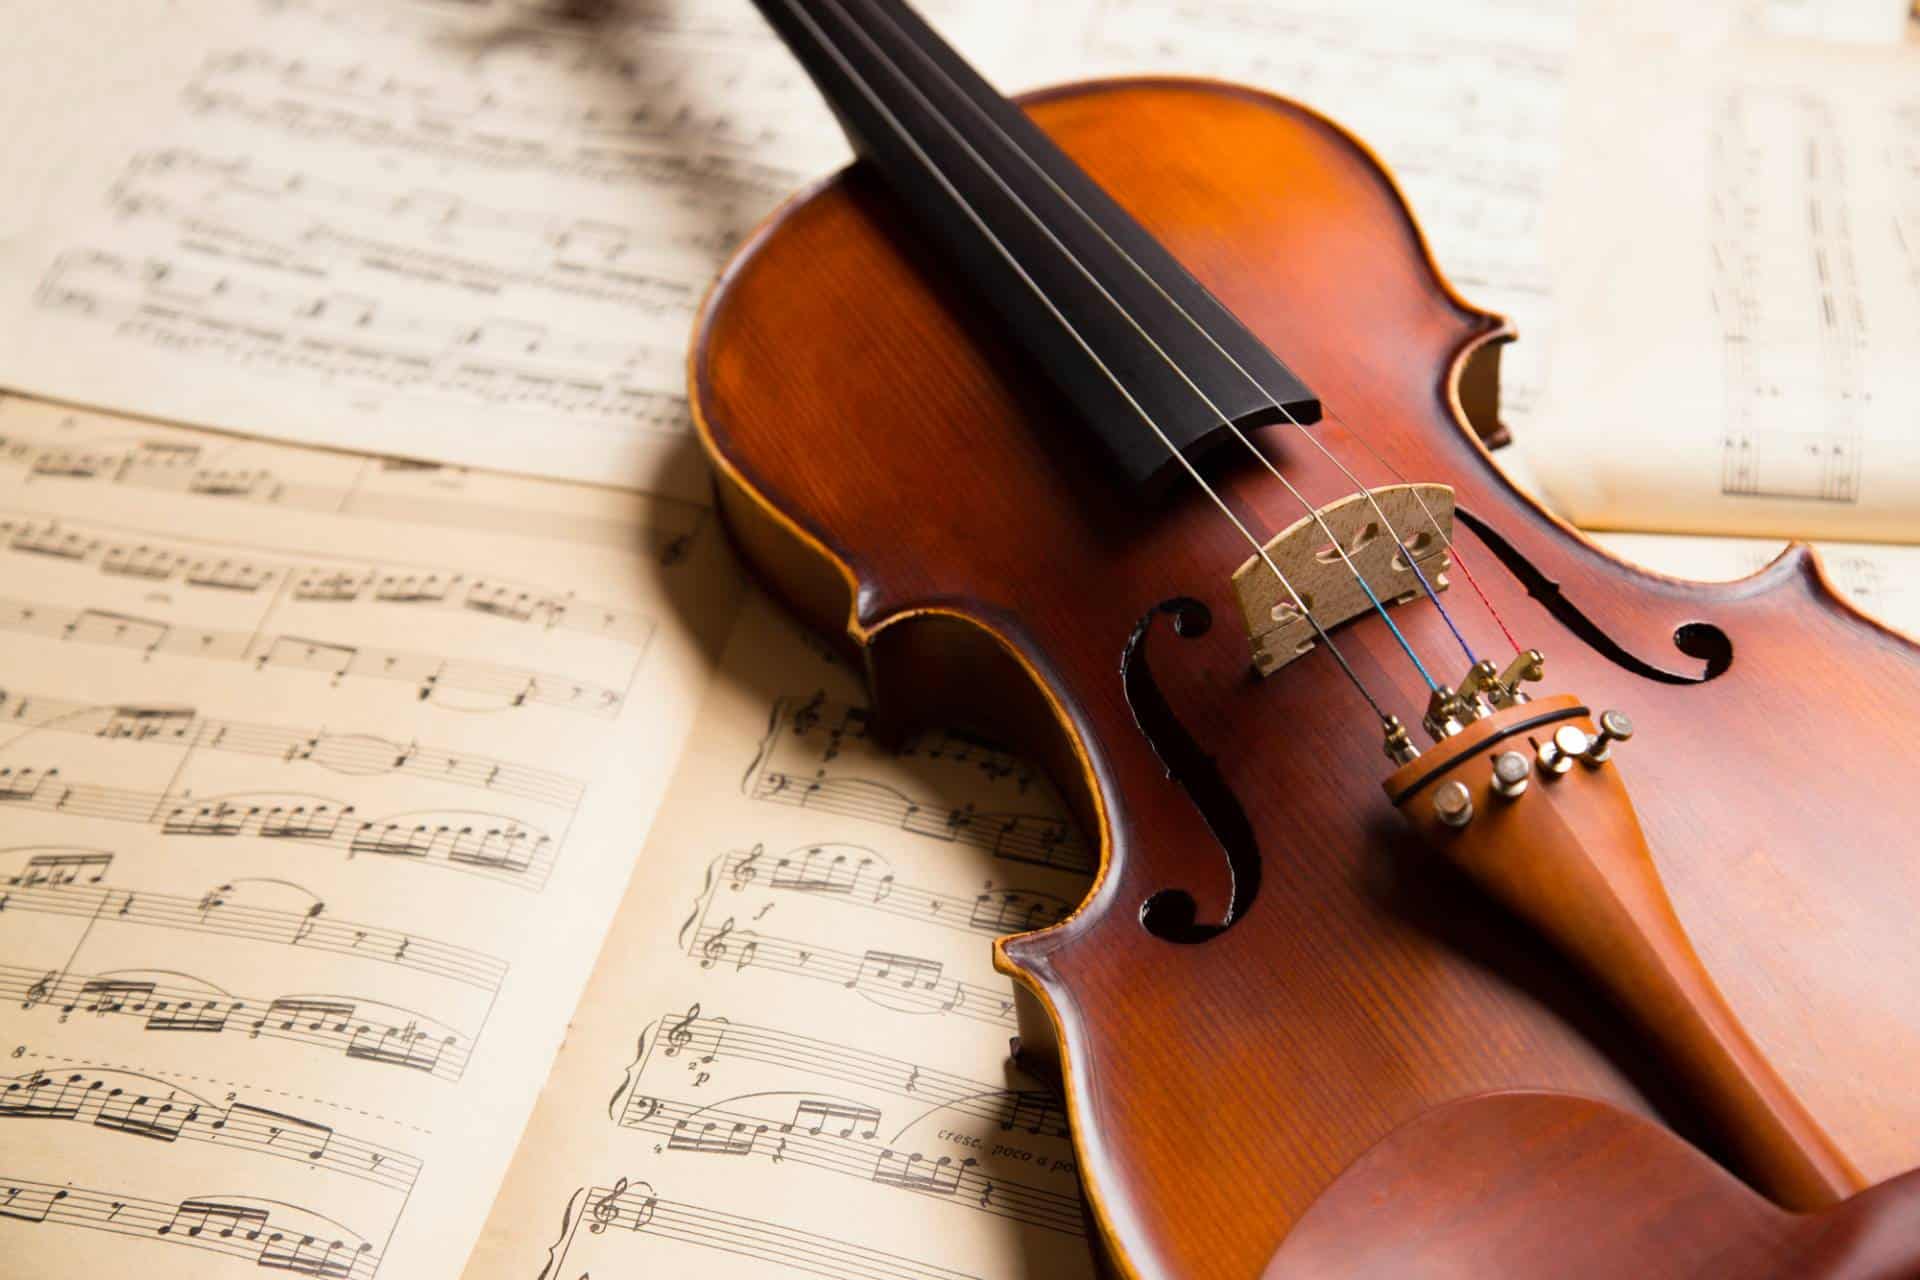 Where are the famed Stradavarius violins made?